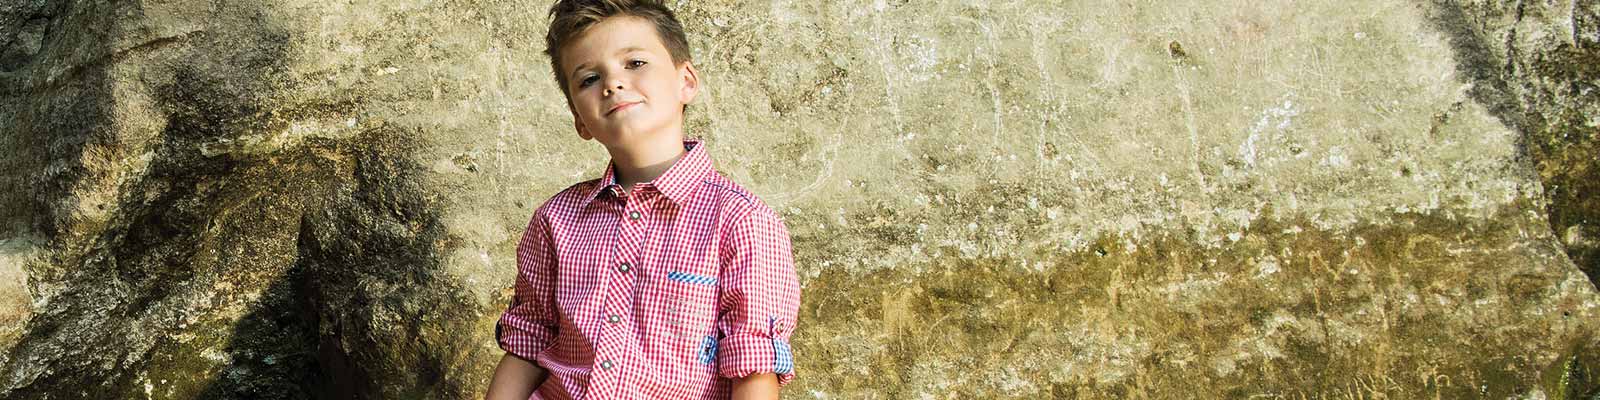 ISAR Trachten Kinder Trachtenhemd Martin Grün Kariertes Hemd für Jungen Zu Lederhose Oder Jeans an Oktoberfest Oder Kirchweih 